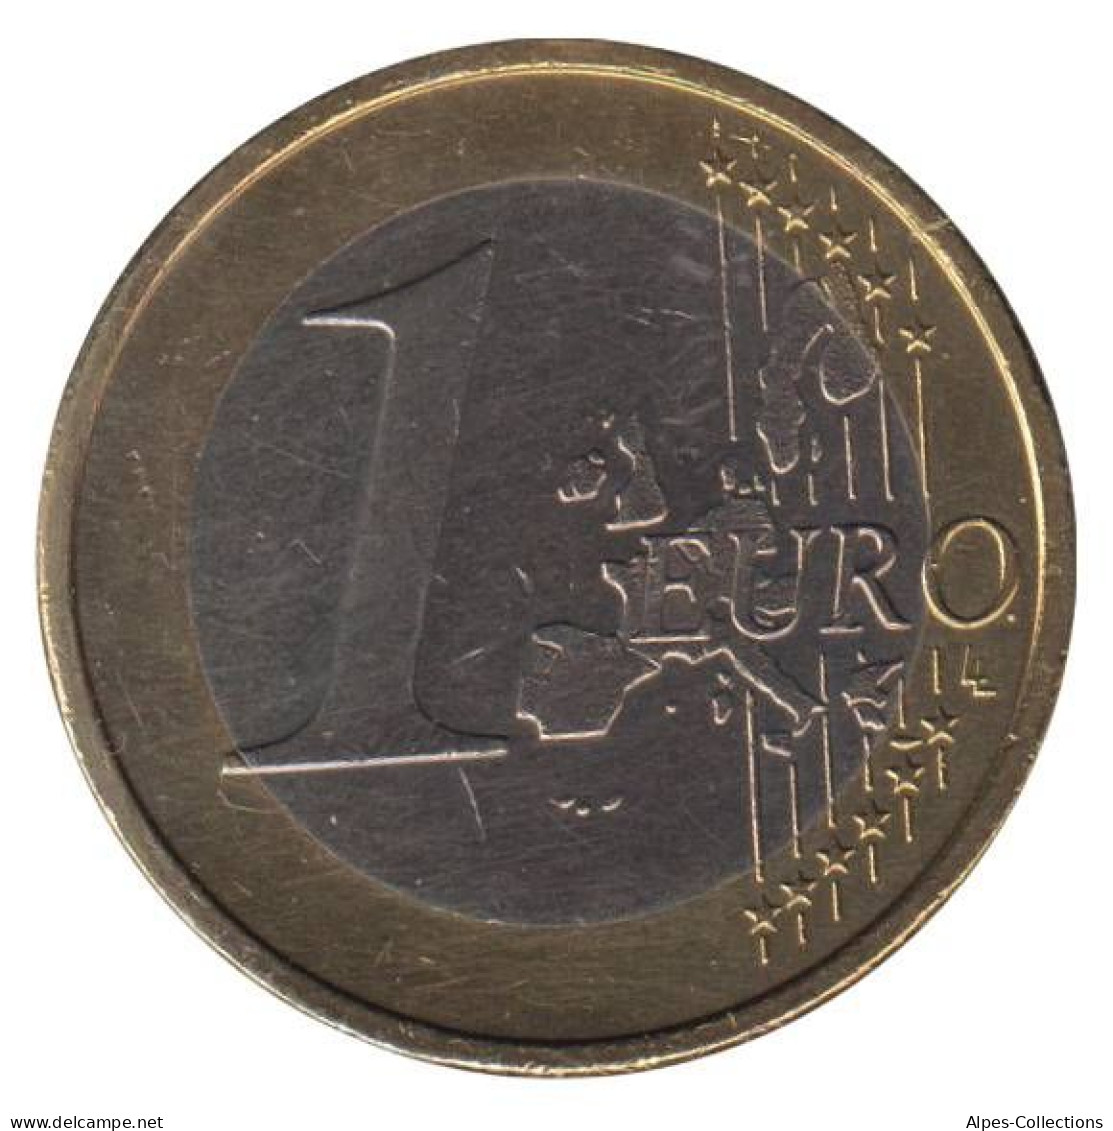 AL10002.1A - ALLEMAGNE - 1 Euro - 2002 A - Allemagne